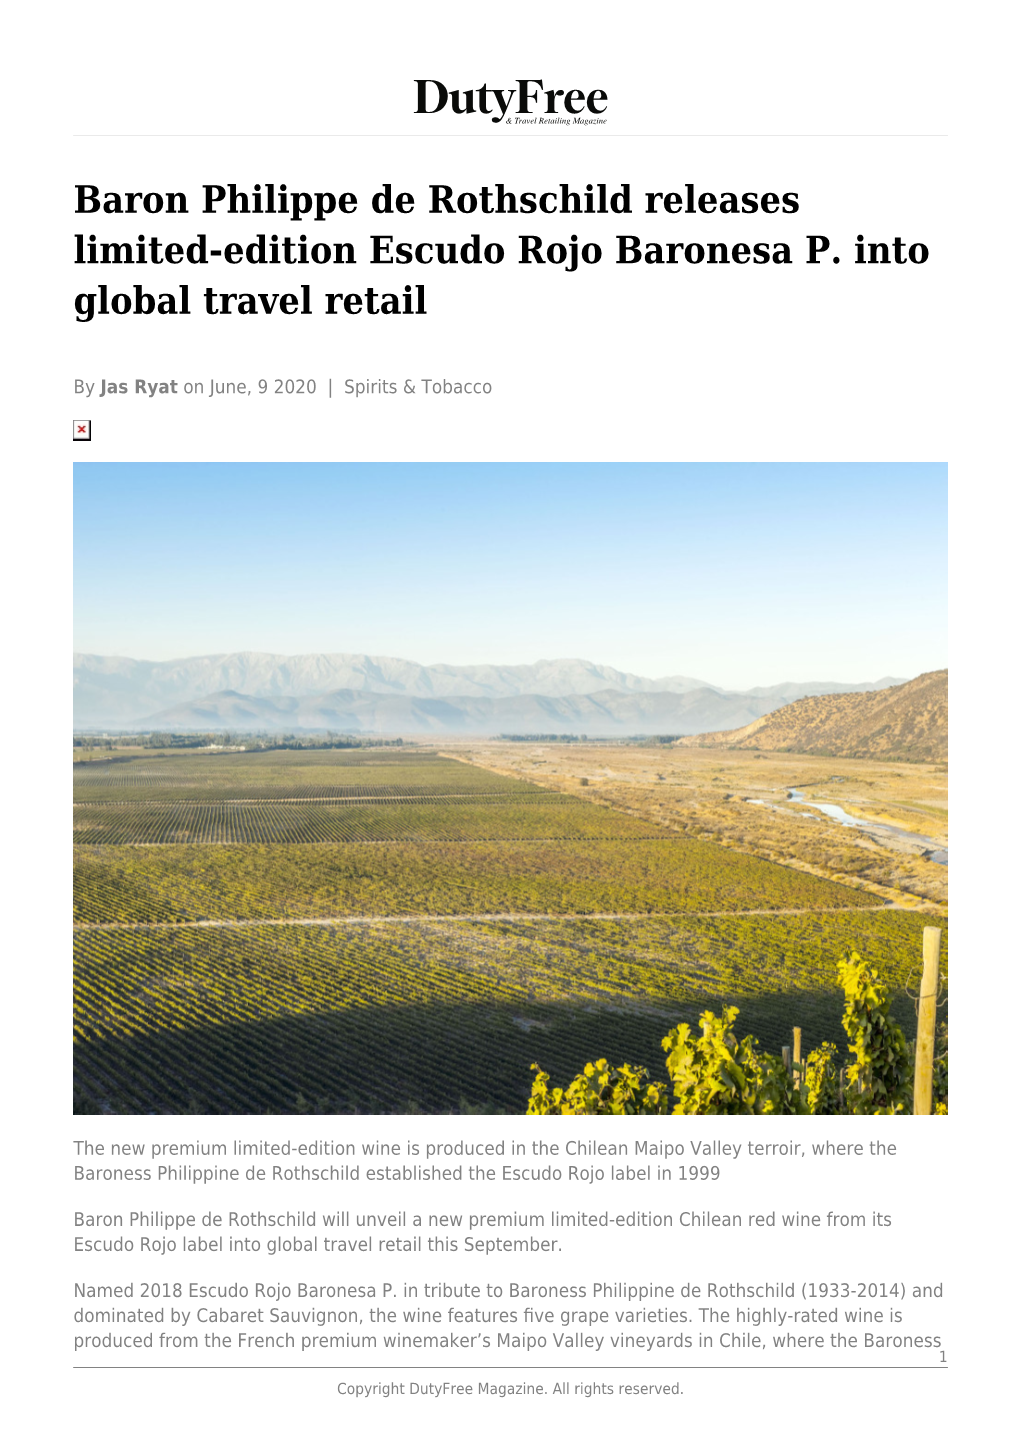 Baron Philippe De Rothschild Releases Limited-Edition Escudo Rojo Baronesa P. Into Global Travel Retail